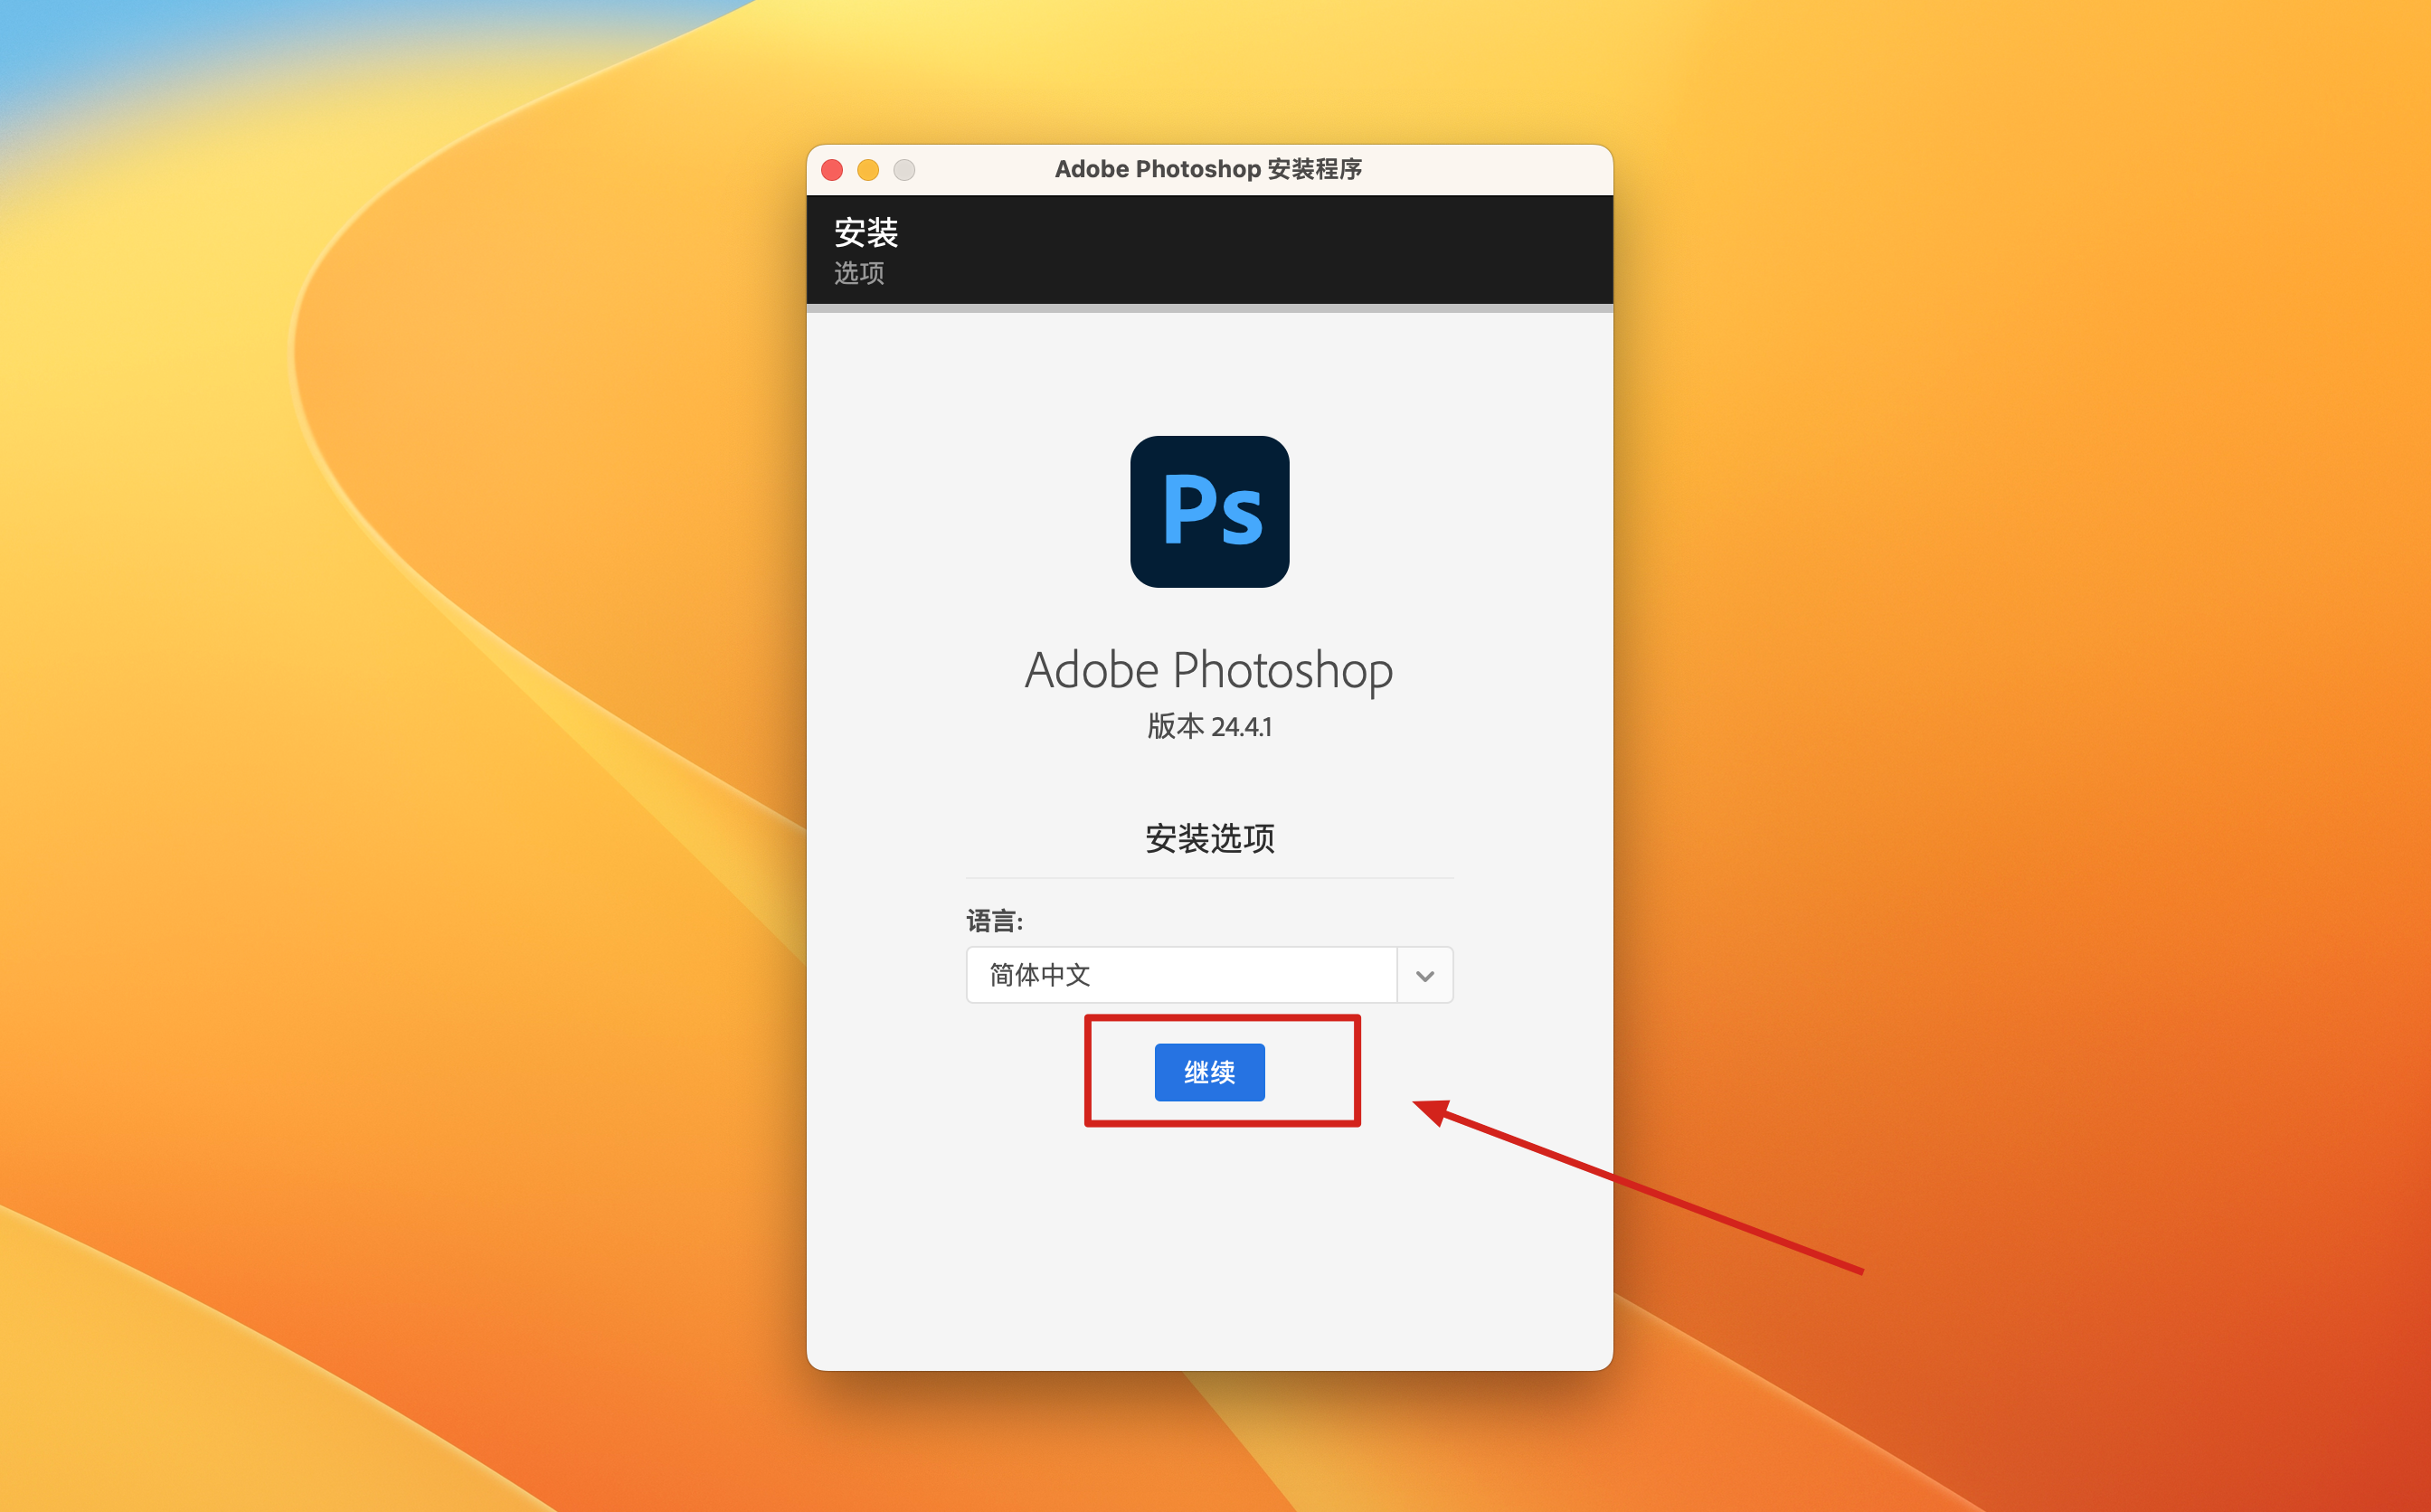 Adobe Photoshop 2023 for Mac v24.4.1 中文激活版 intel/M1通用(ps2023) 🌍内置中文安装！